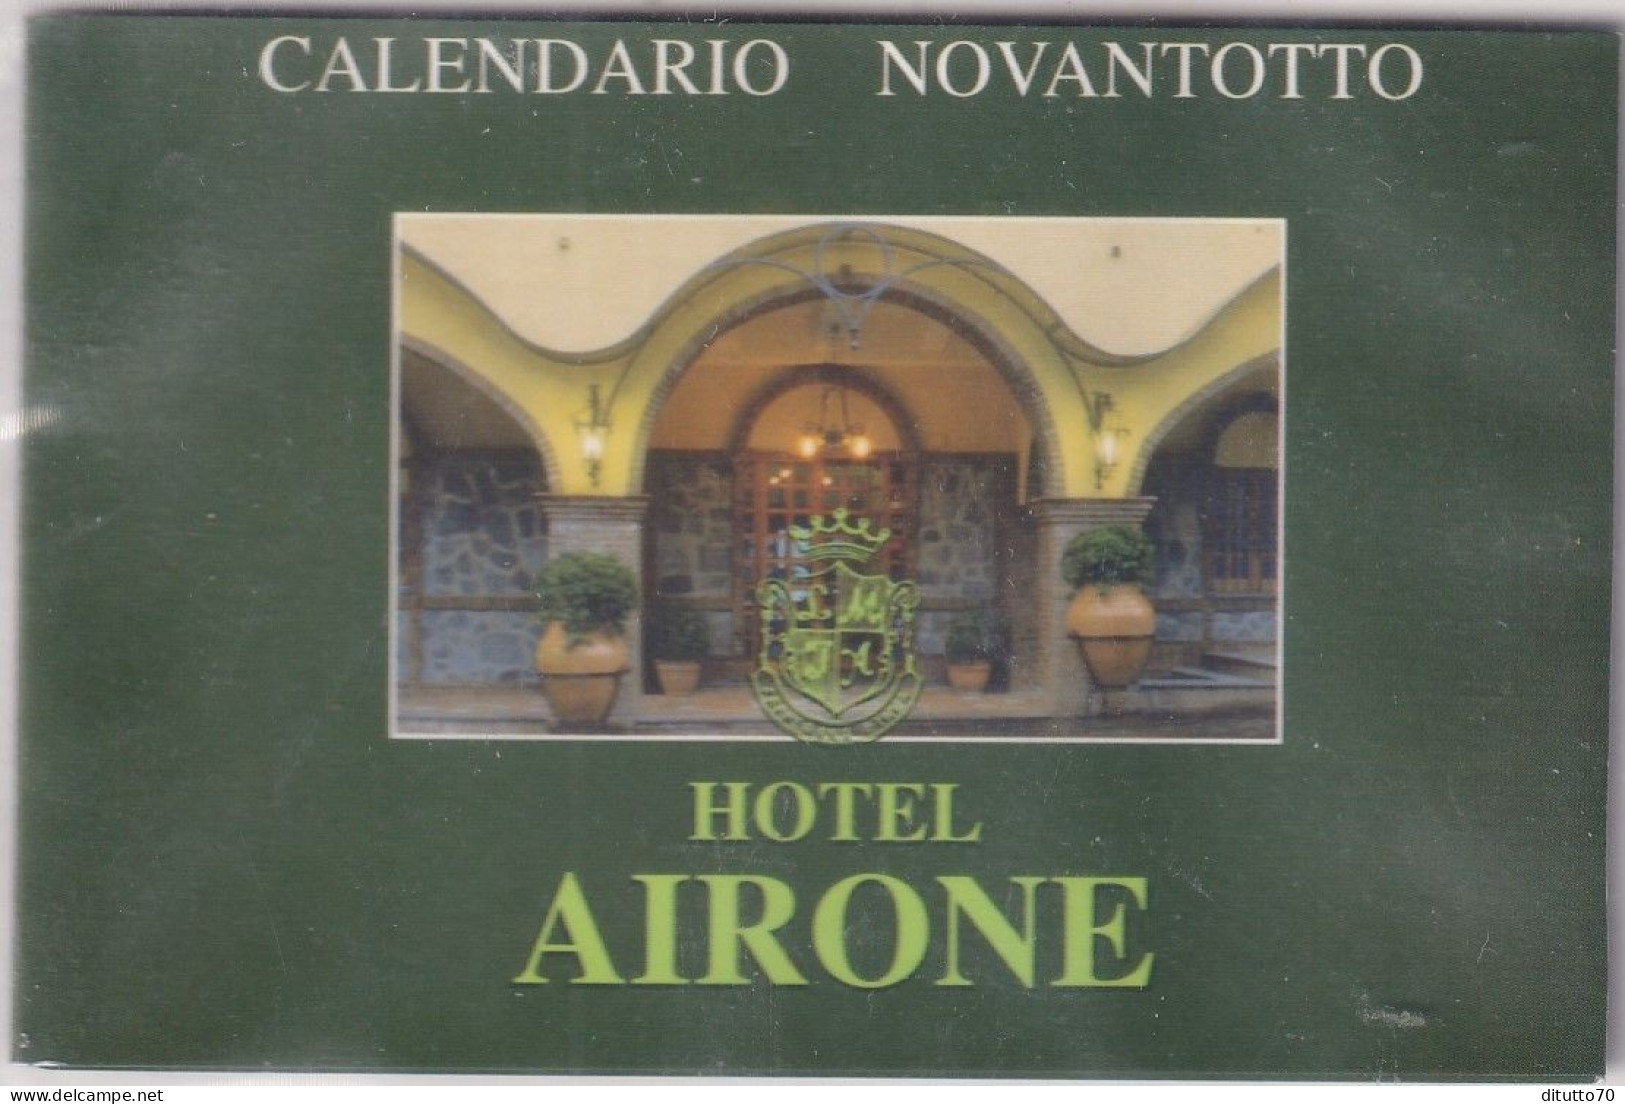 Calendarietto - Hotel Airone - Anno 1998 - Petit Format : 1991-00